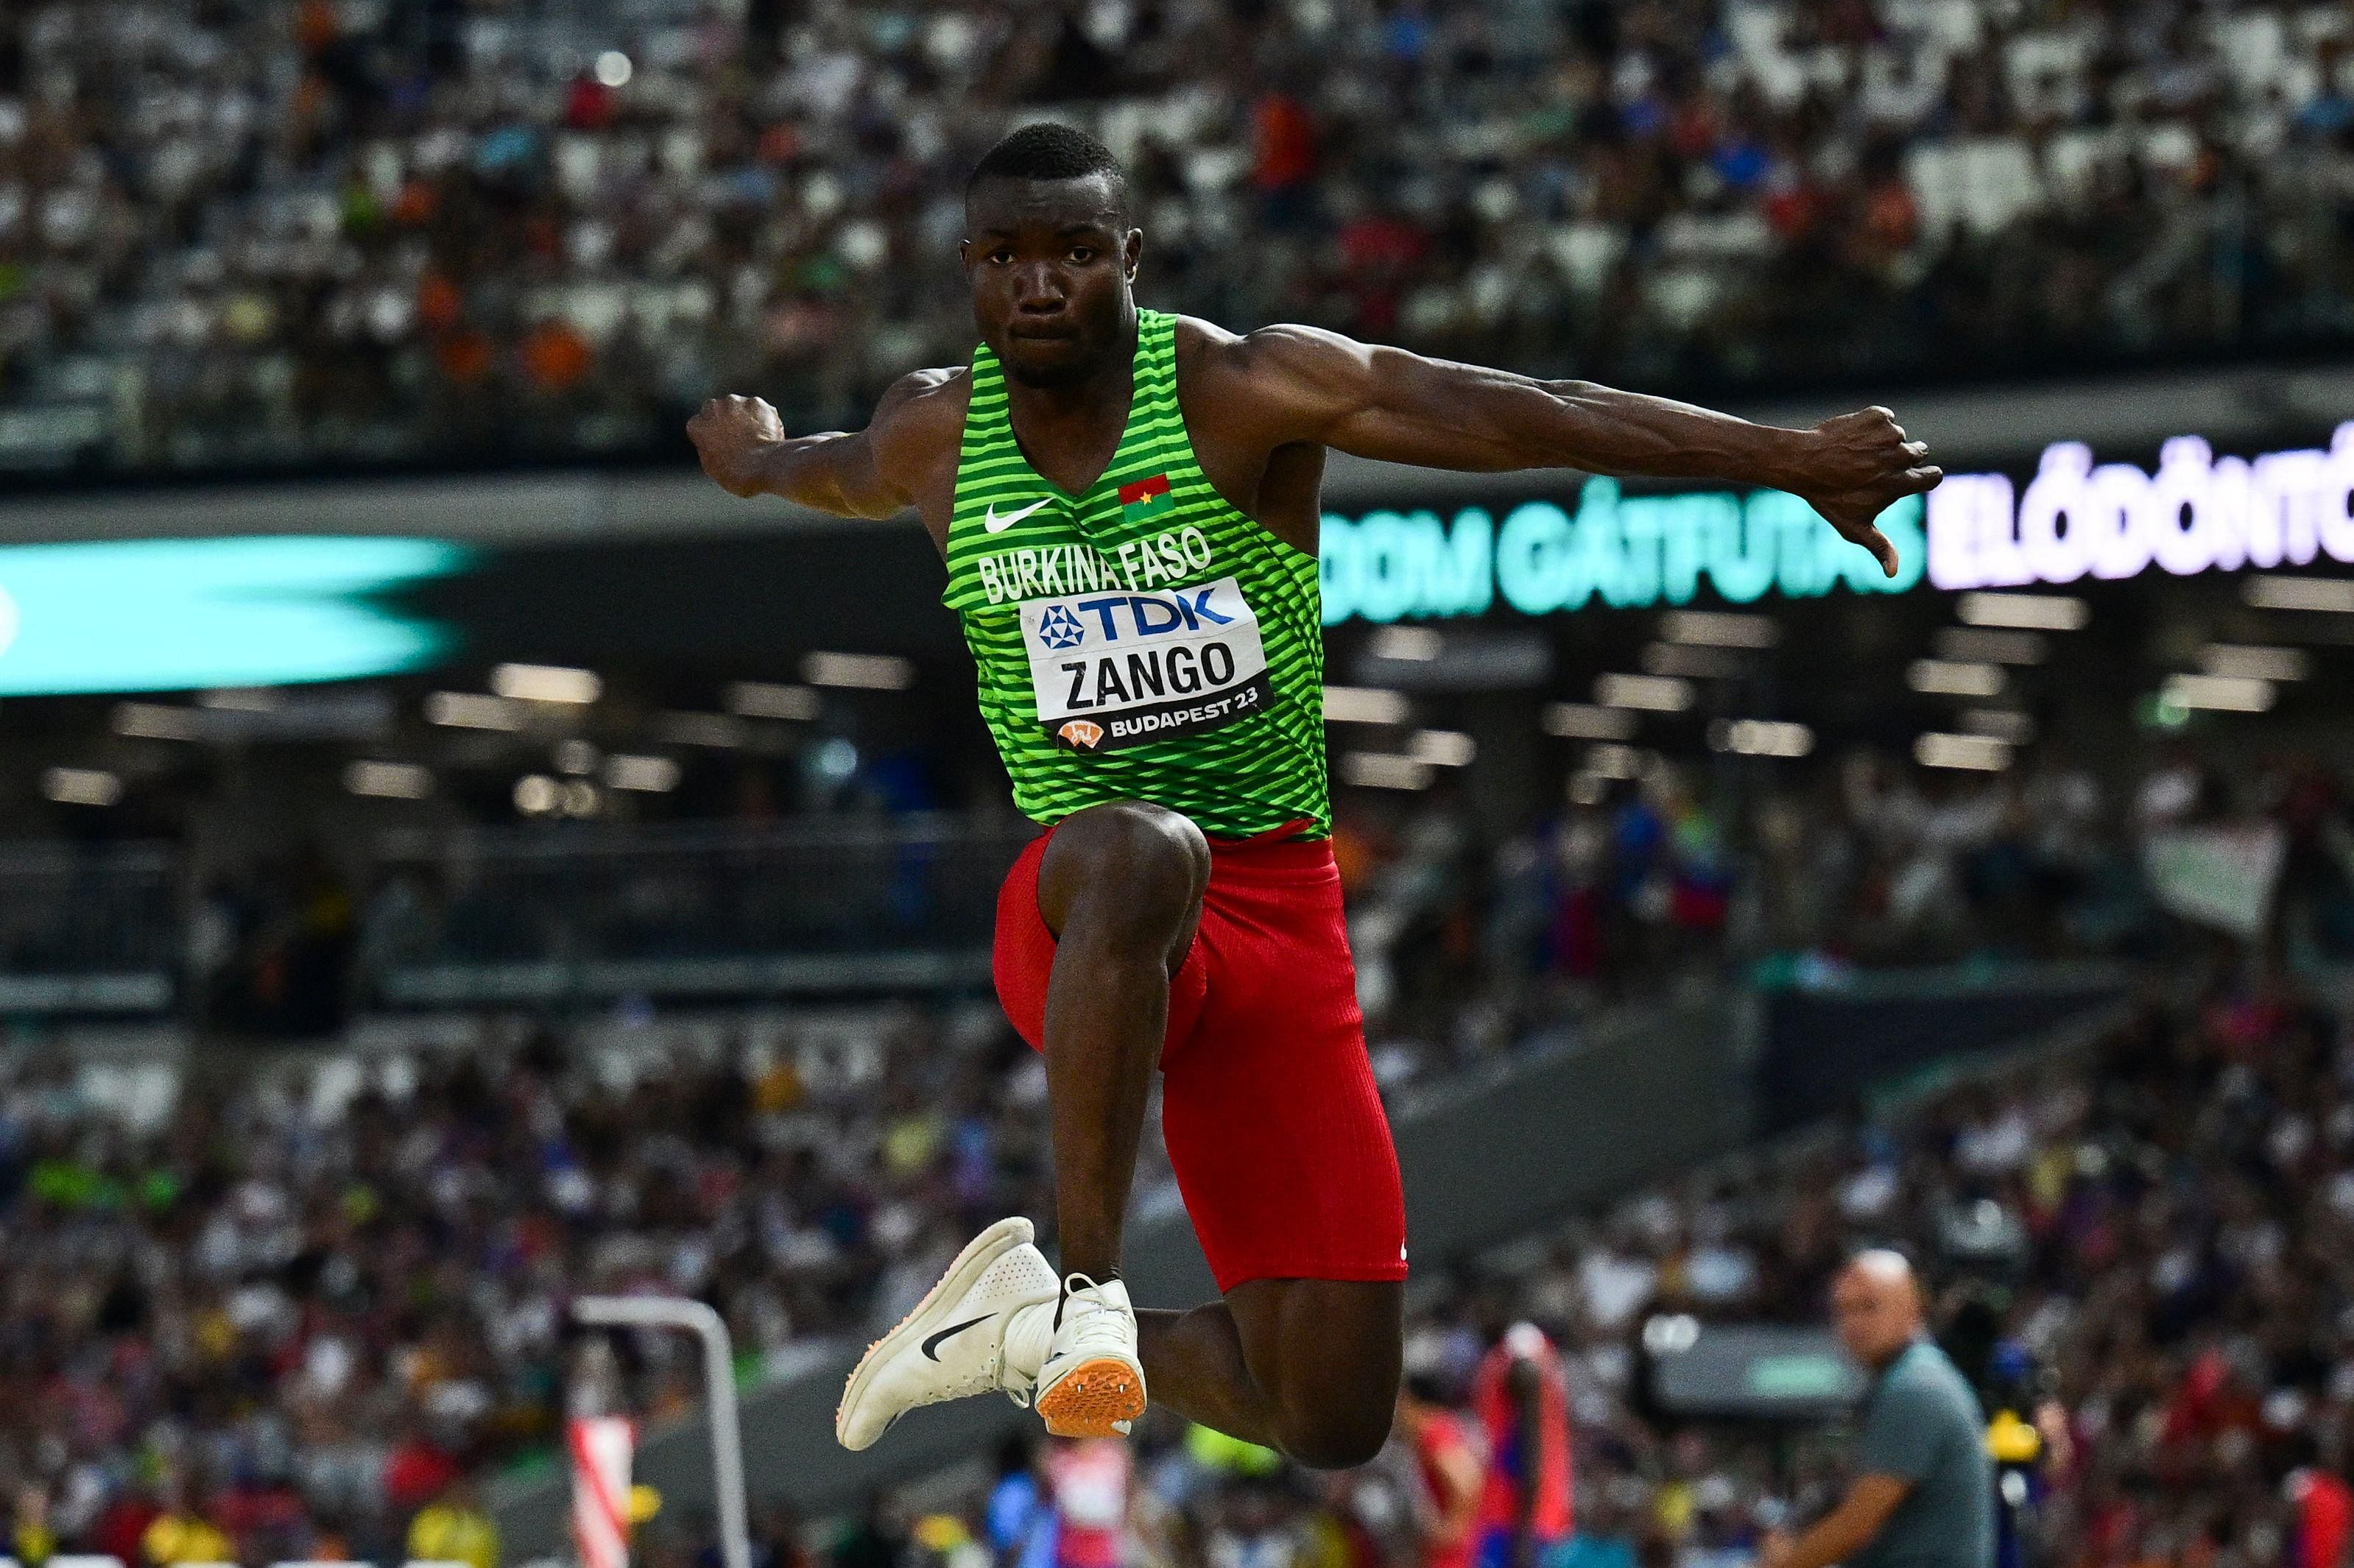 Triple jumper Zango soars to Burkina Faso's first-ever world gold